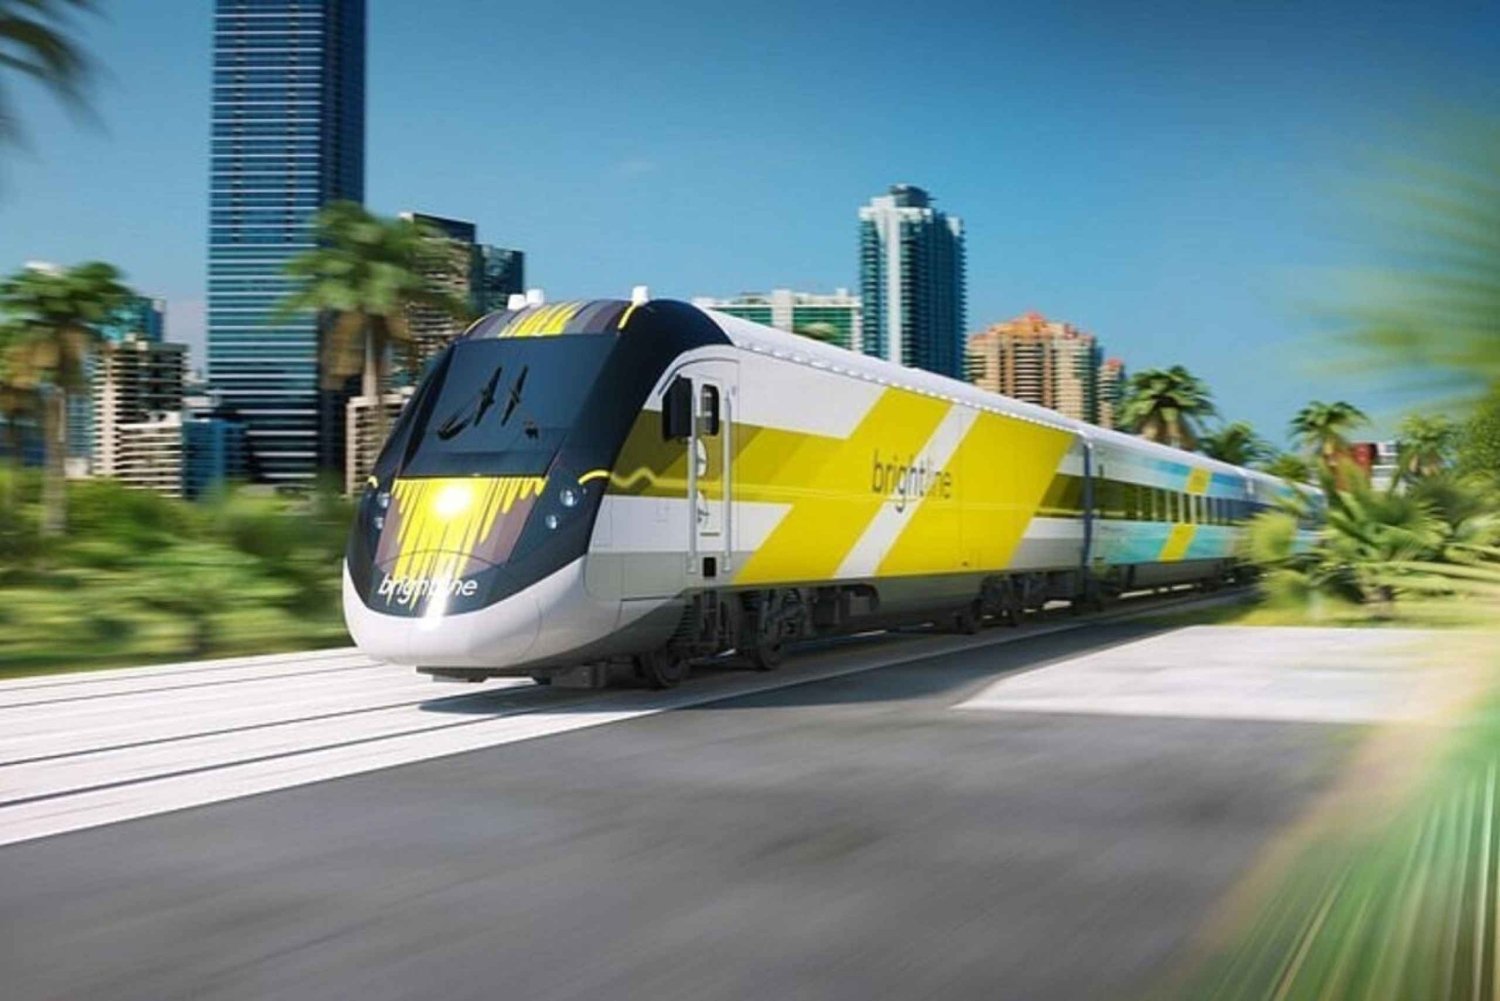 Miami: Train Transfer to South Florida Cities